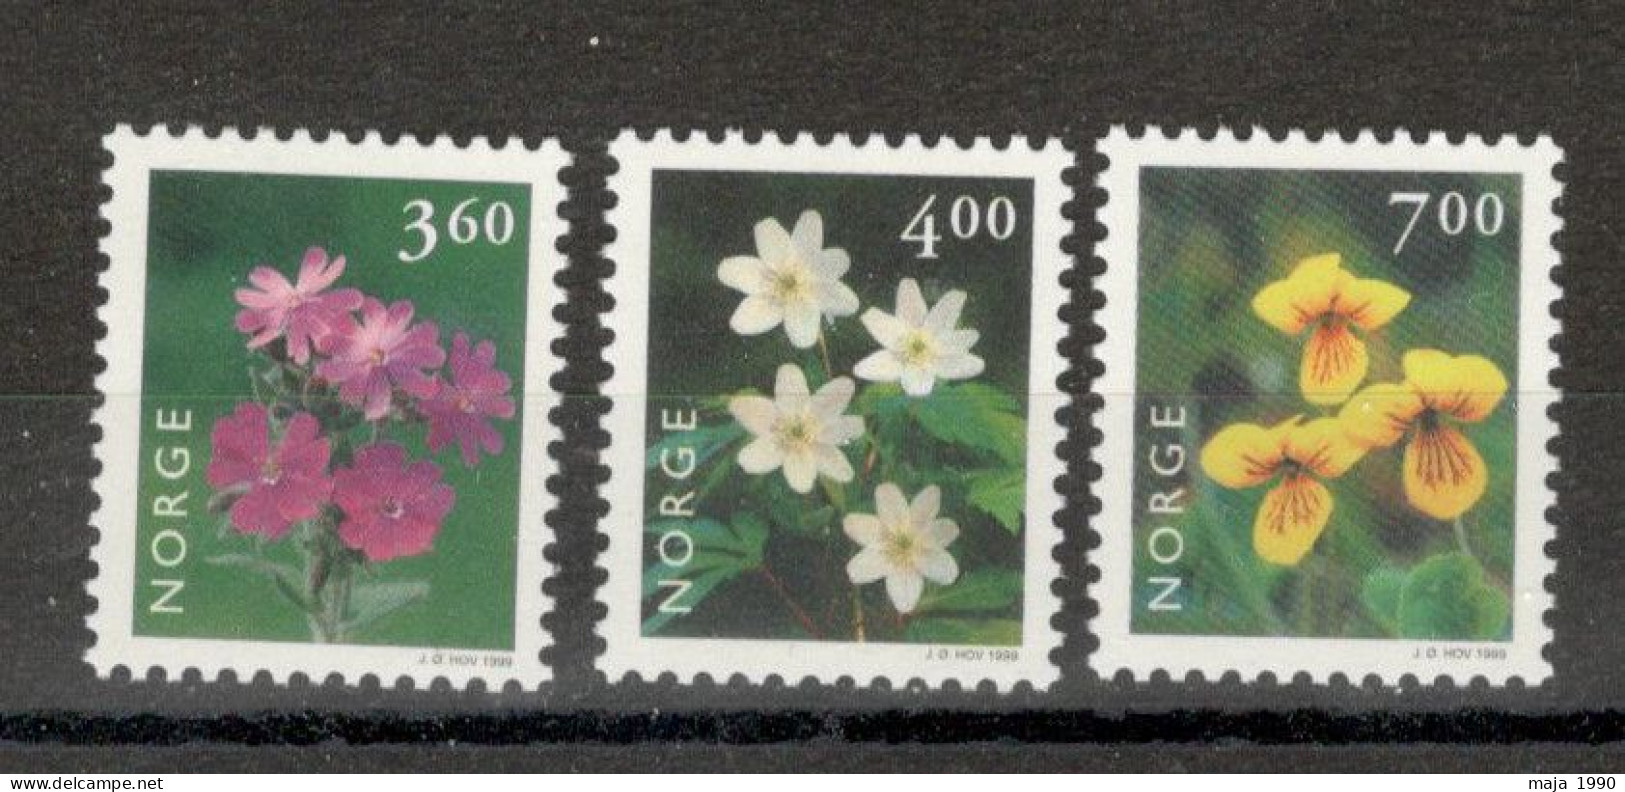 NORWAY - MNH SET - FLORA - FLOWERS - Mi.No. 1303/05 - 1999. - Neufs